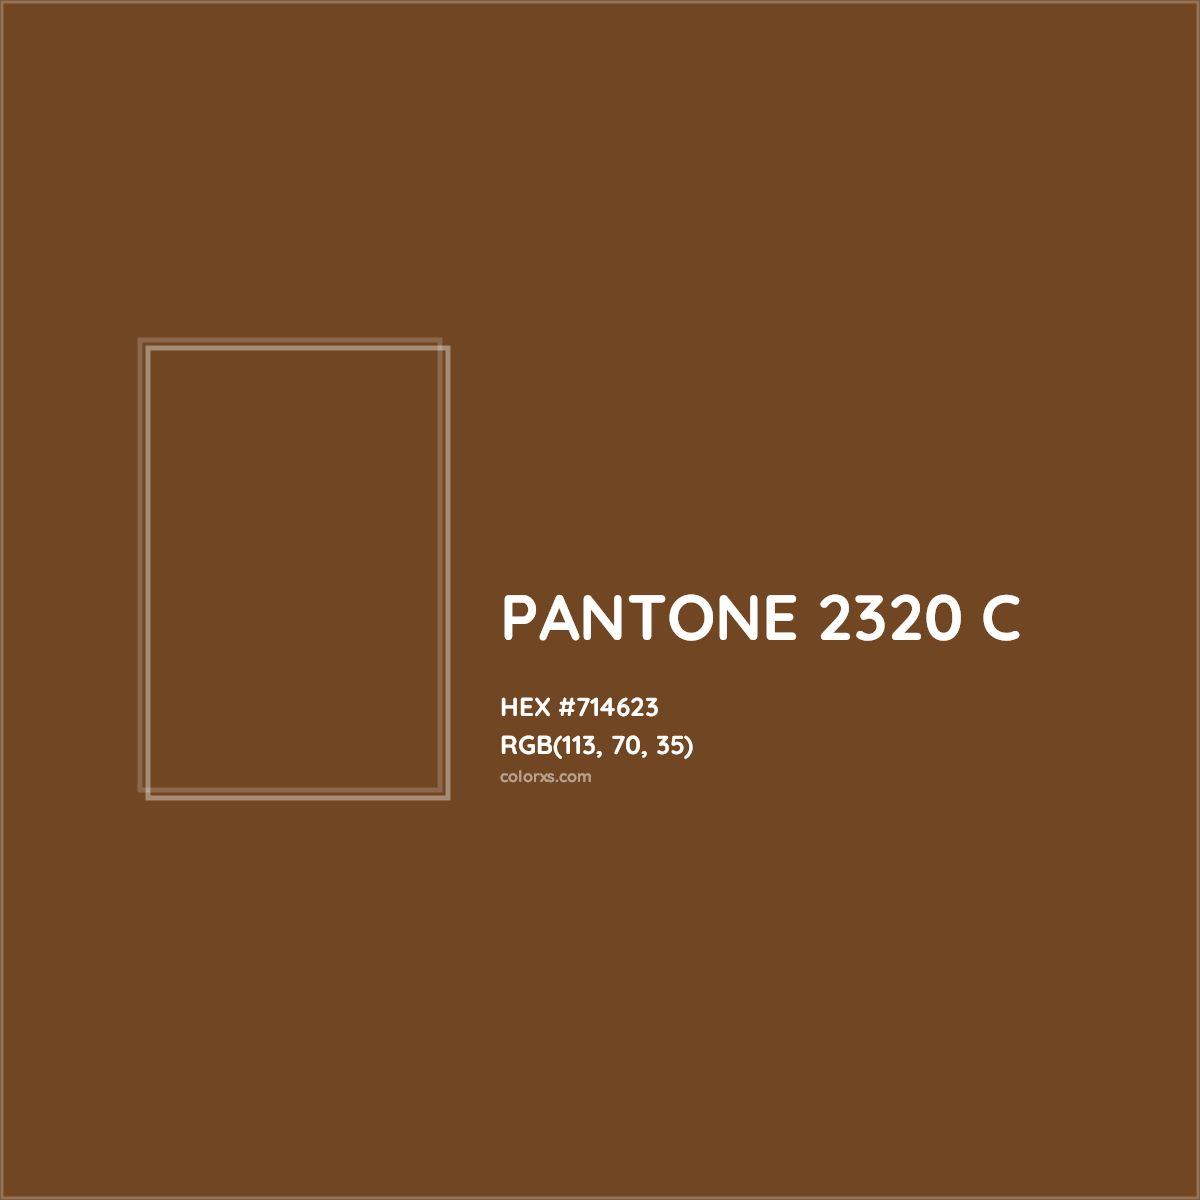 HEX #714623 PANTONE 2320 C CMS Pantone PMS - Color Code